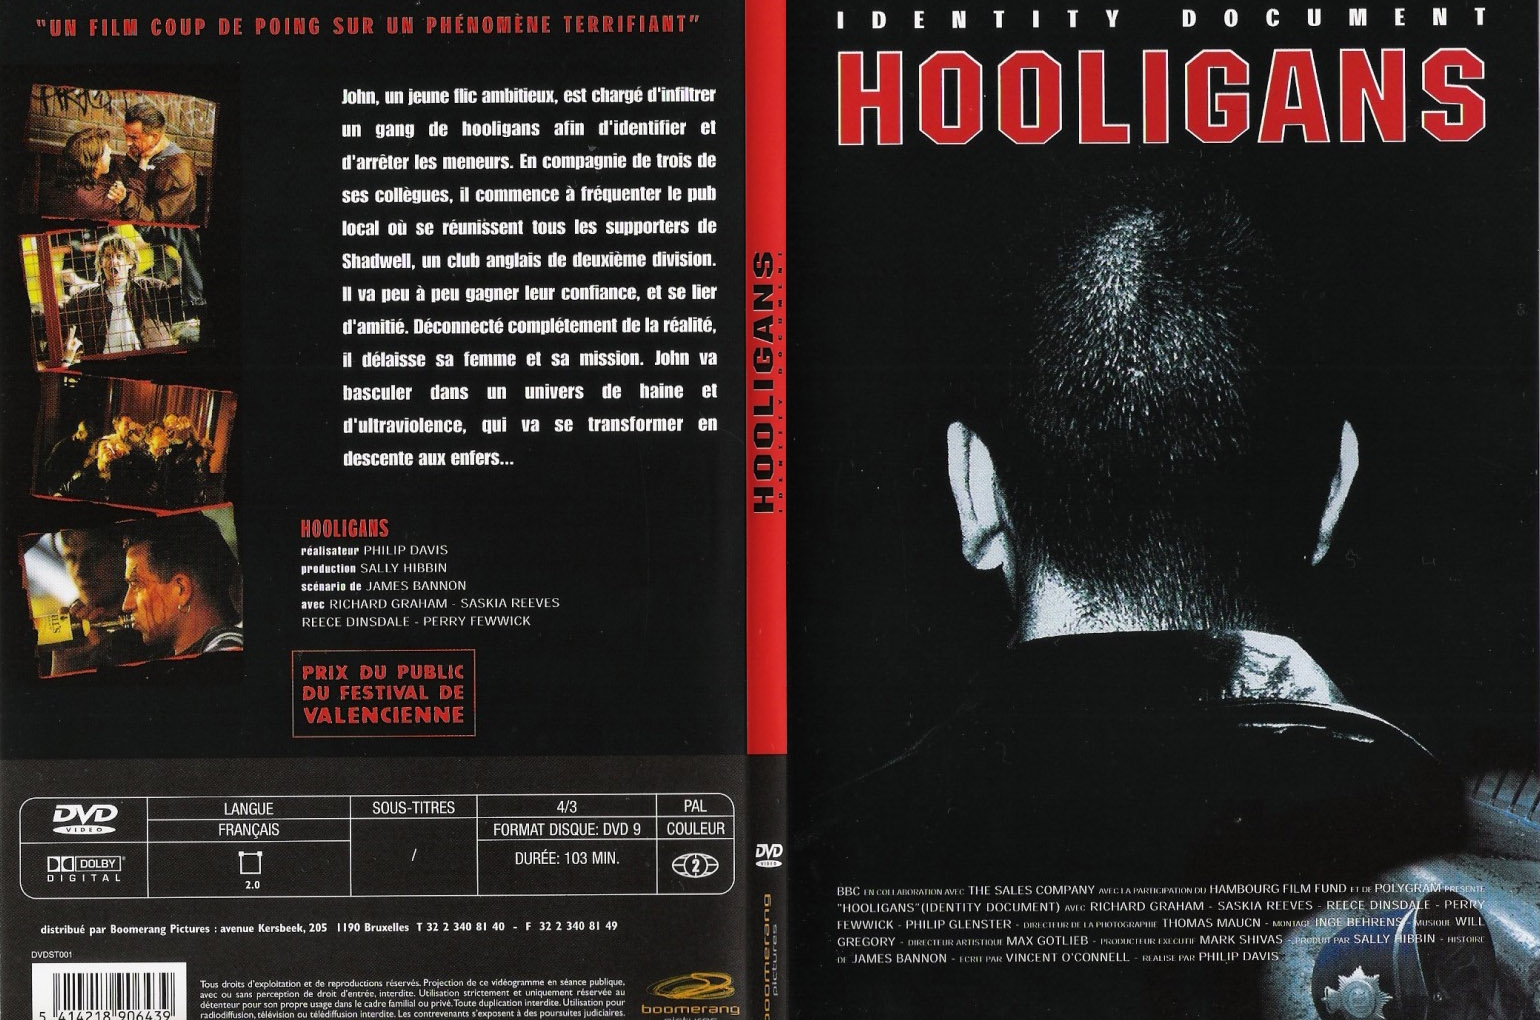 Jaquette DVD Hooligans - SLIM